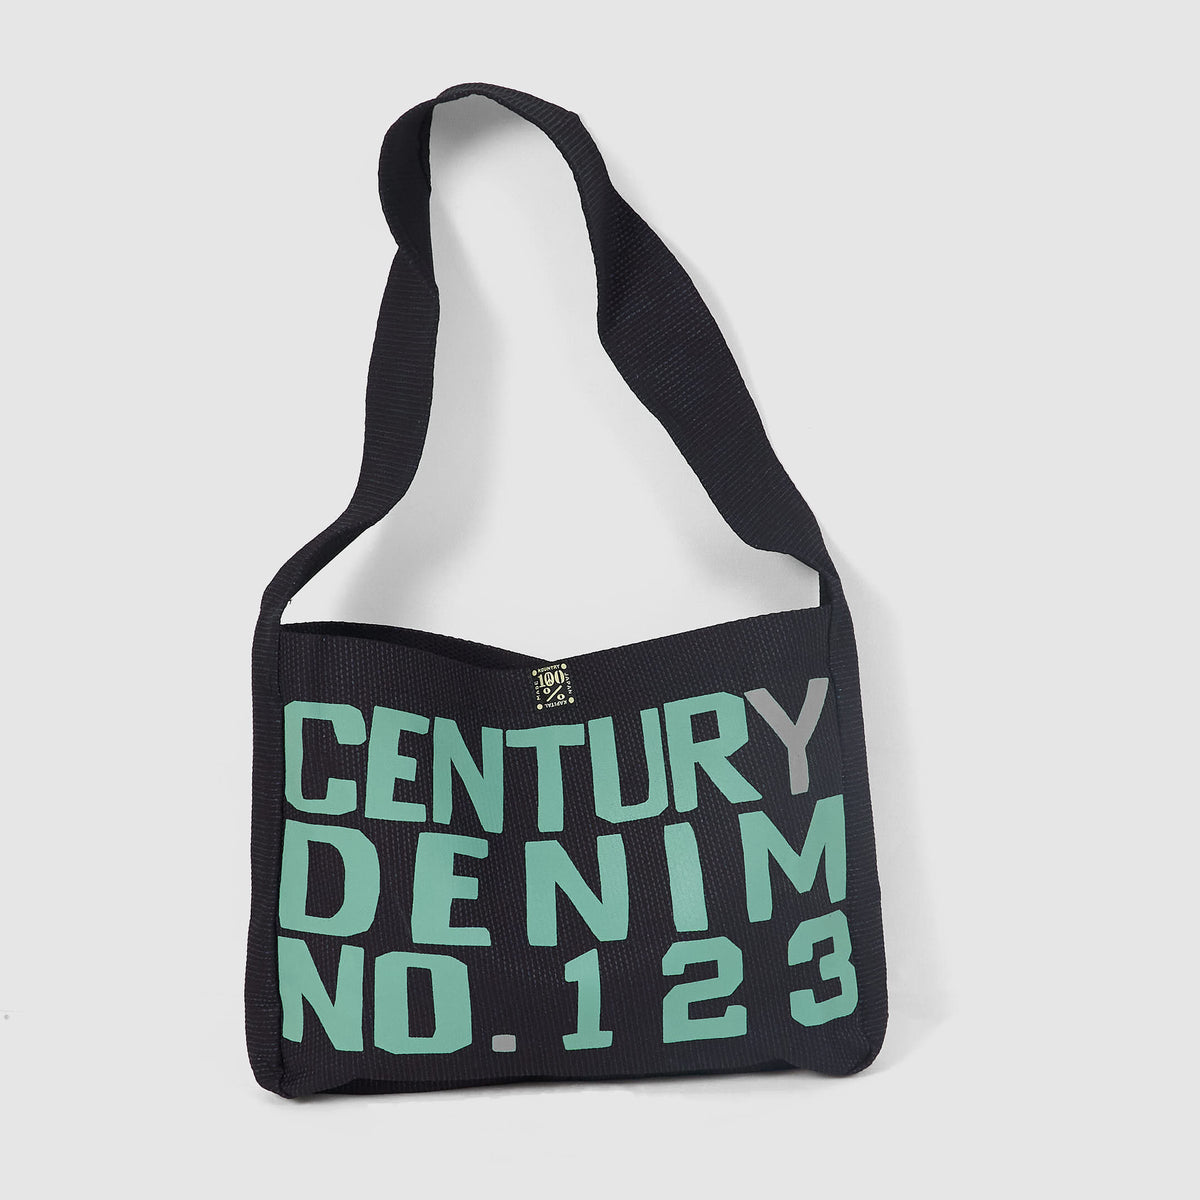 Kapital Century Denim Tote Book Bag No. 1 2 3, No. 9+S, No. 7+S, No 5,